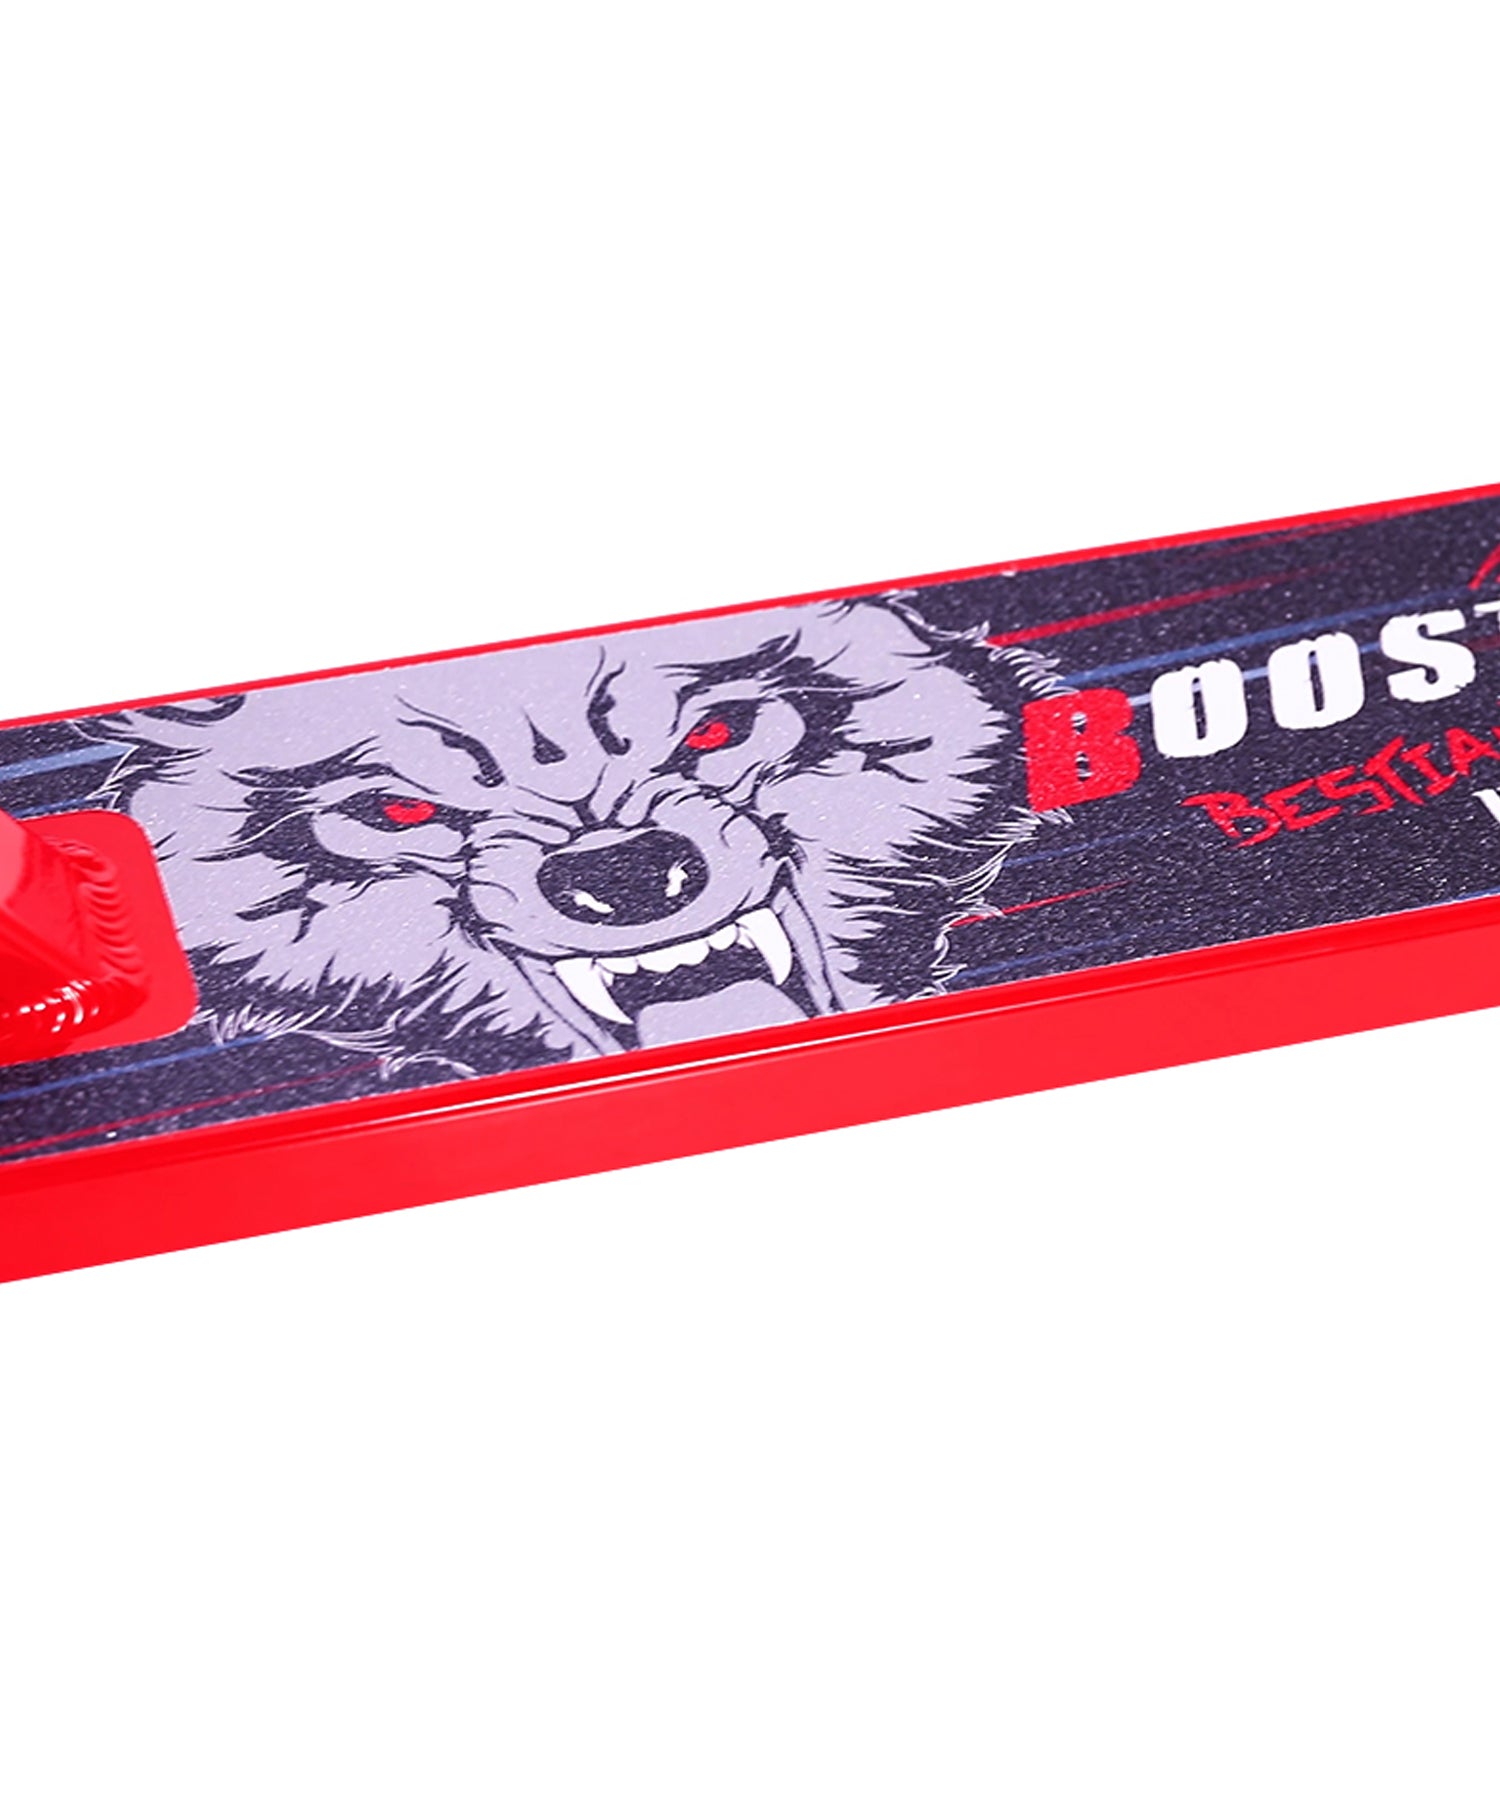 bestial-wolf-scoter-completo-booster-b18-color-rojo-horquilla de aluminio-ruedas-aluminio-modelo-profesional